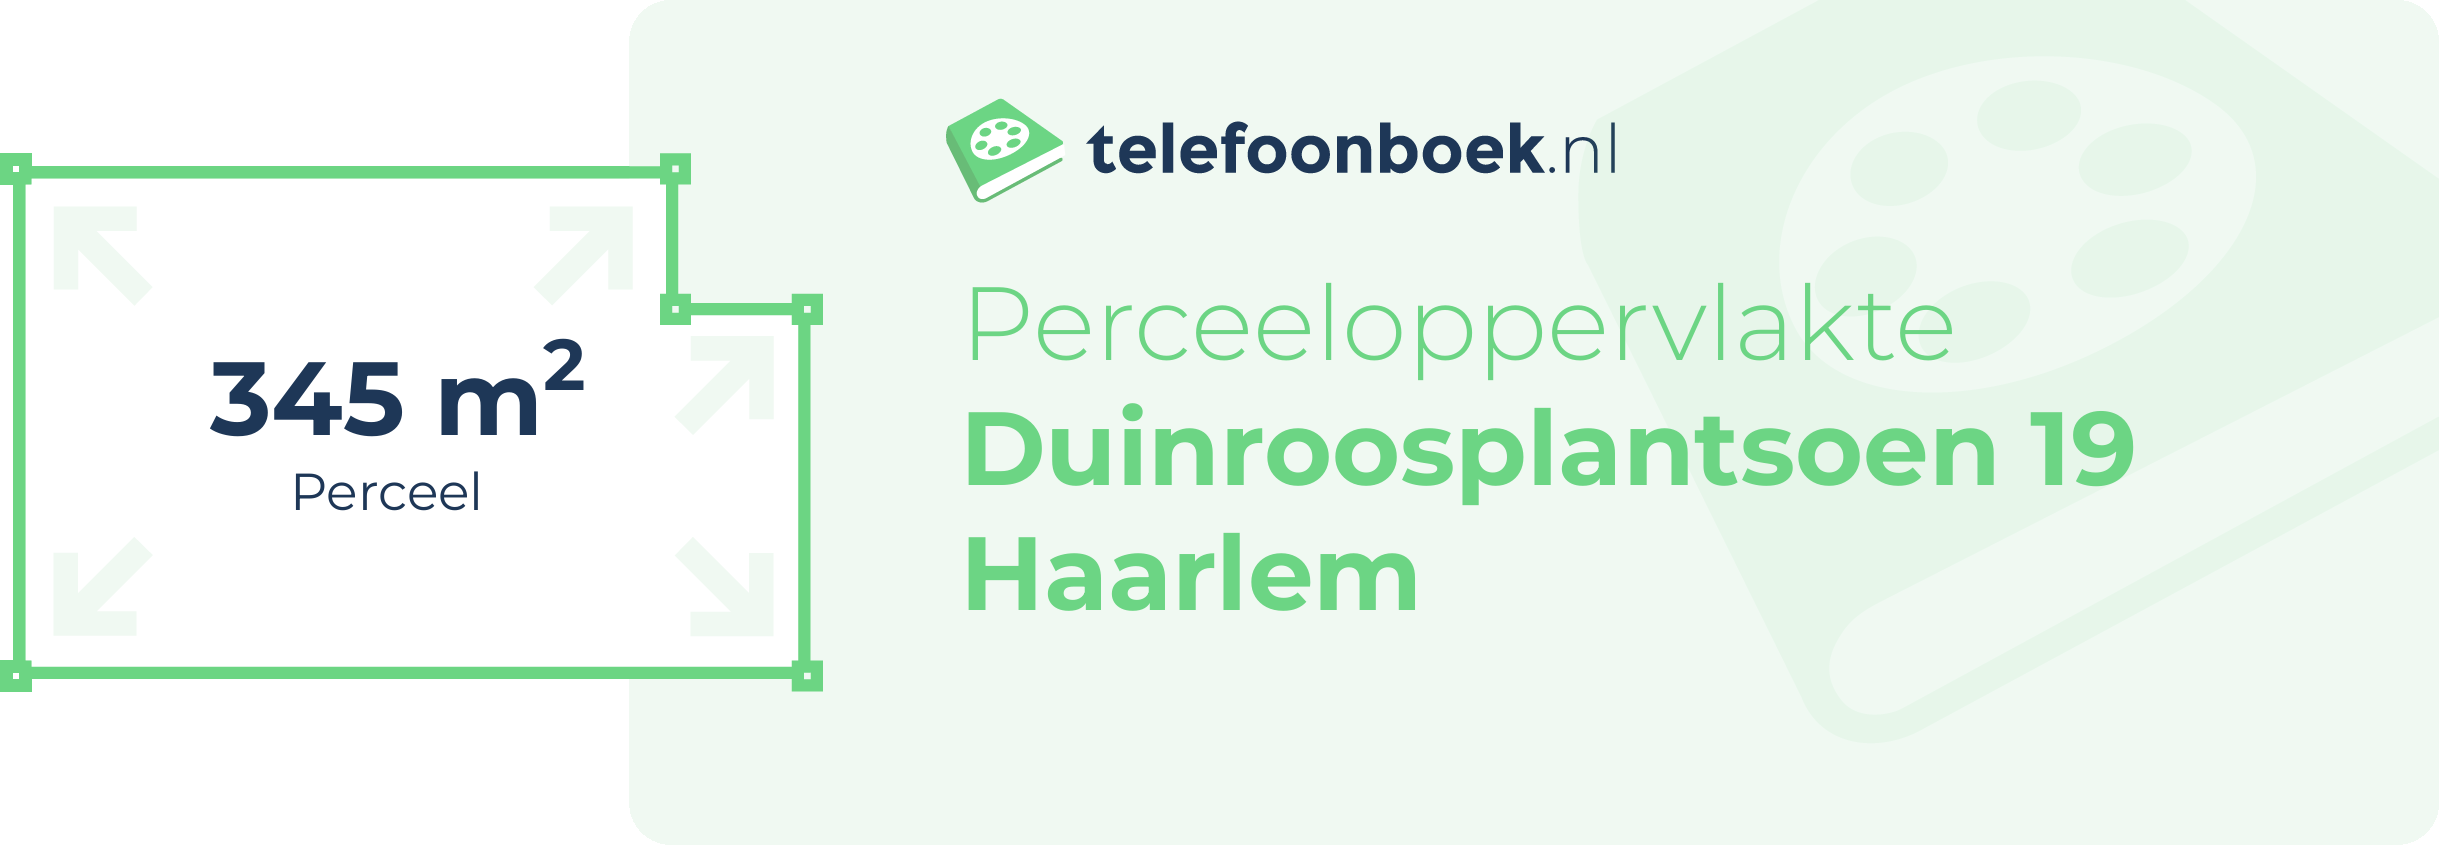 Perceeloppervlakte Duinroosplantsoen 19 Haarlem